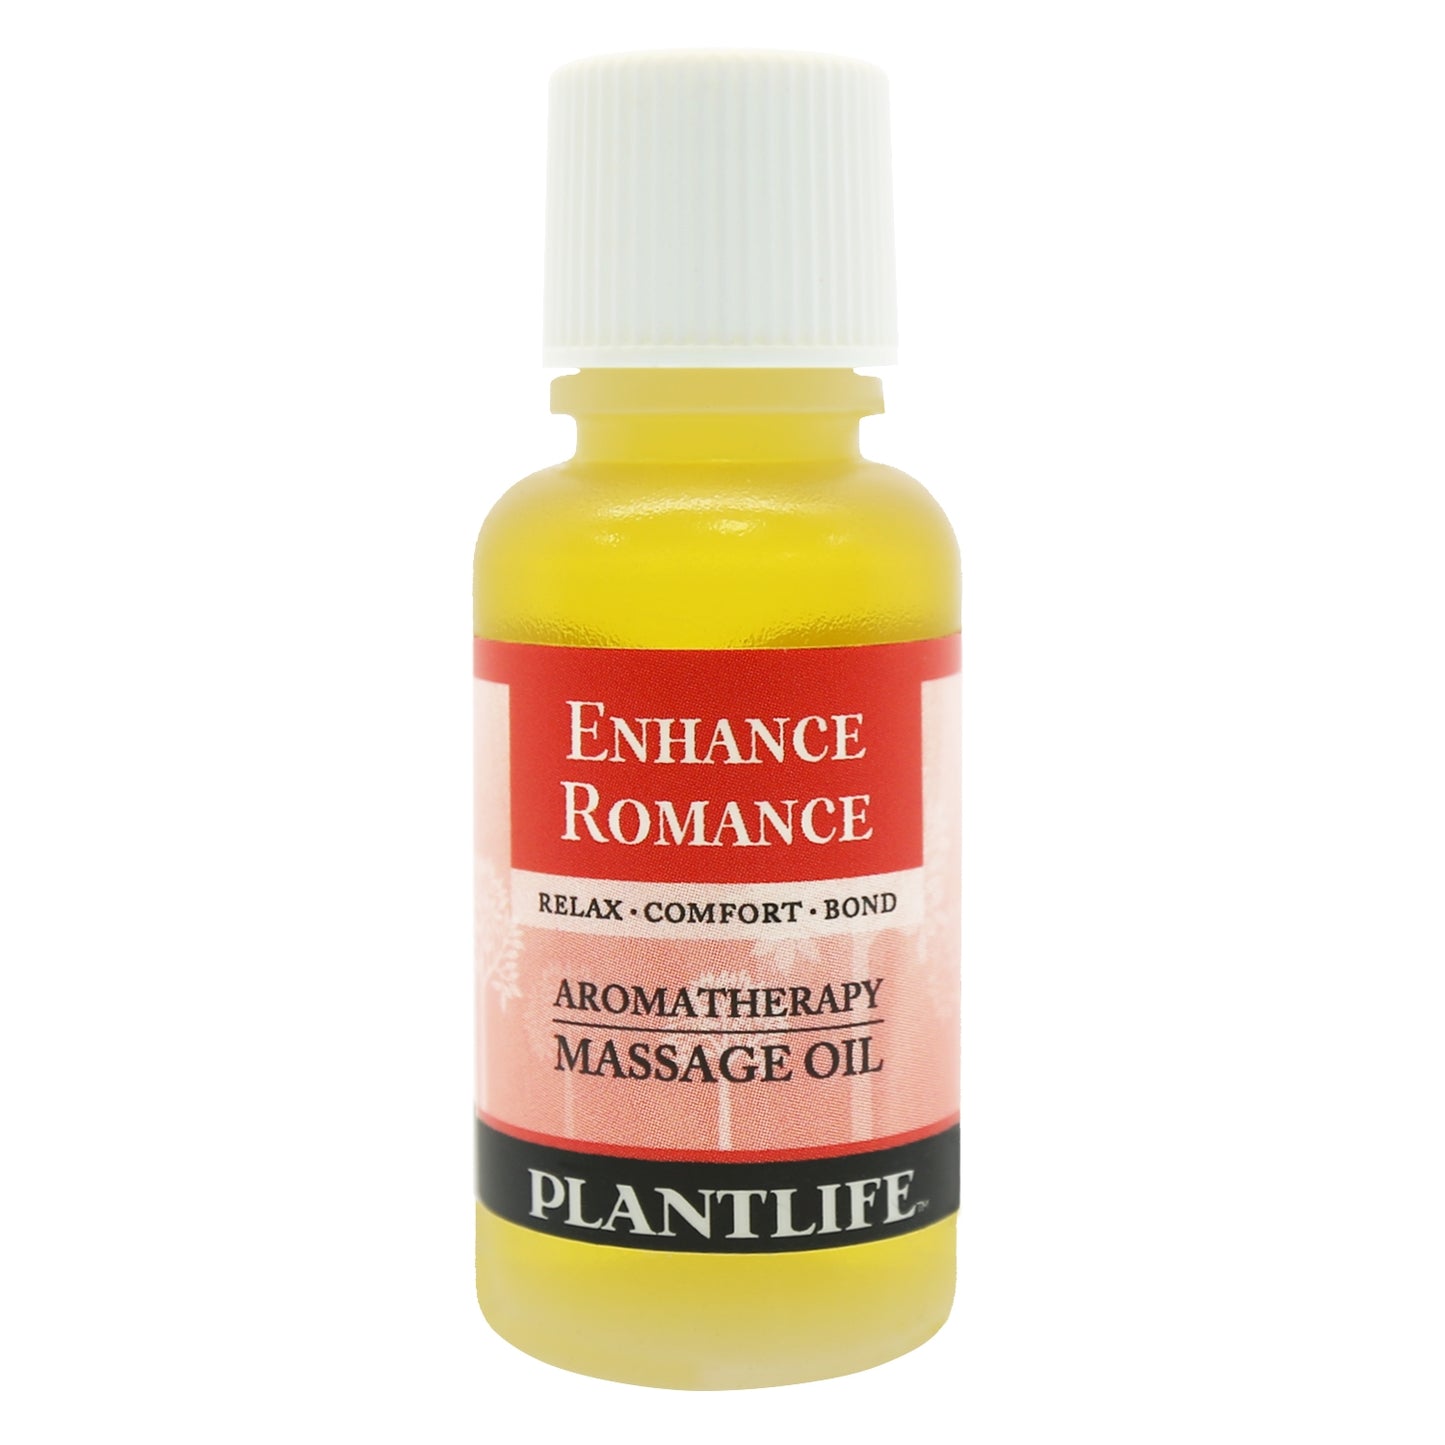 Enhance Romance Travel Size Massage Oil